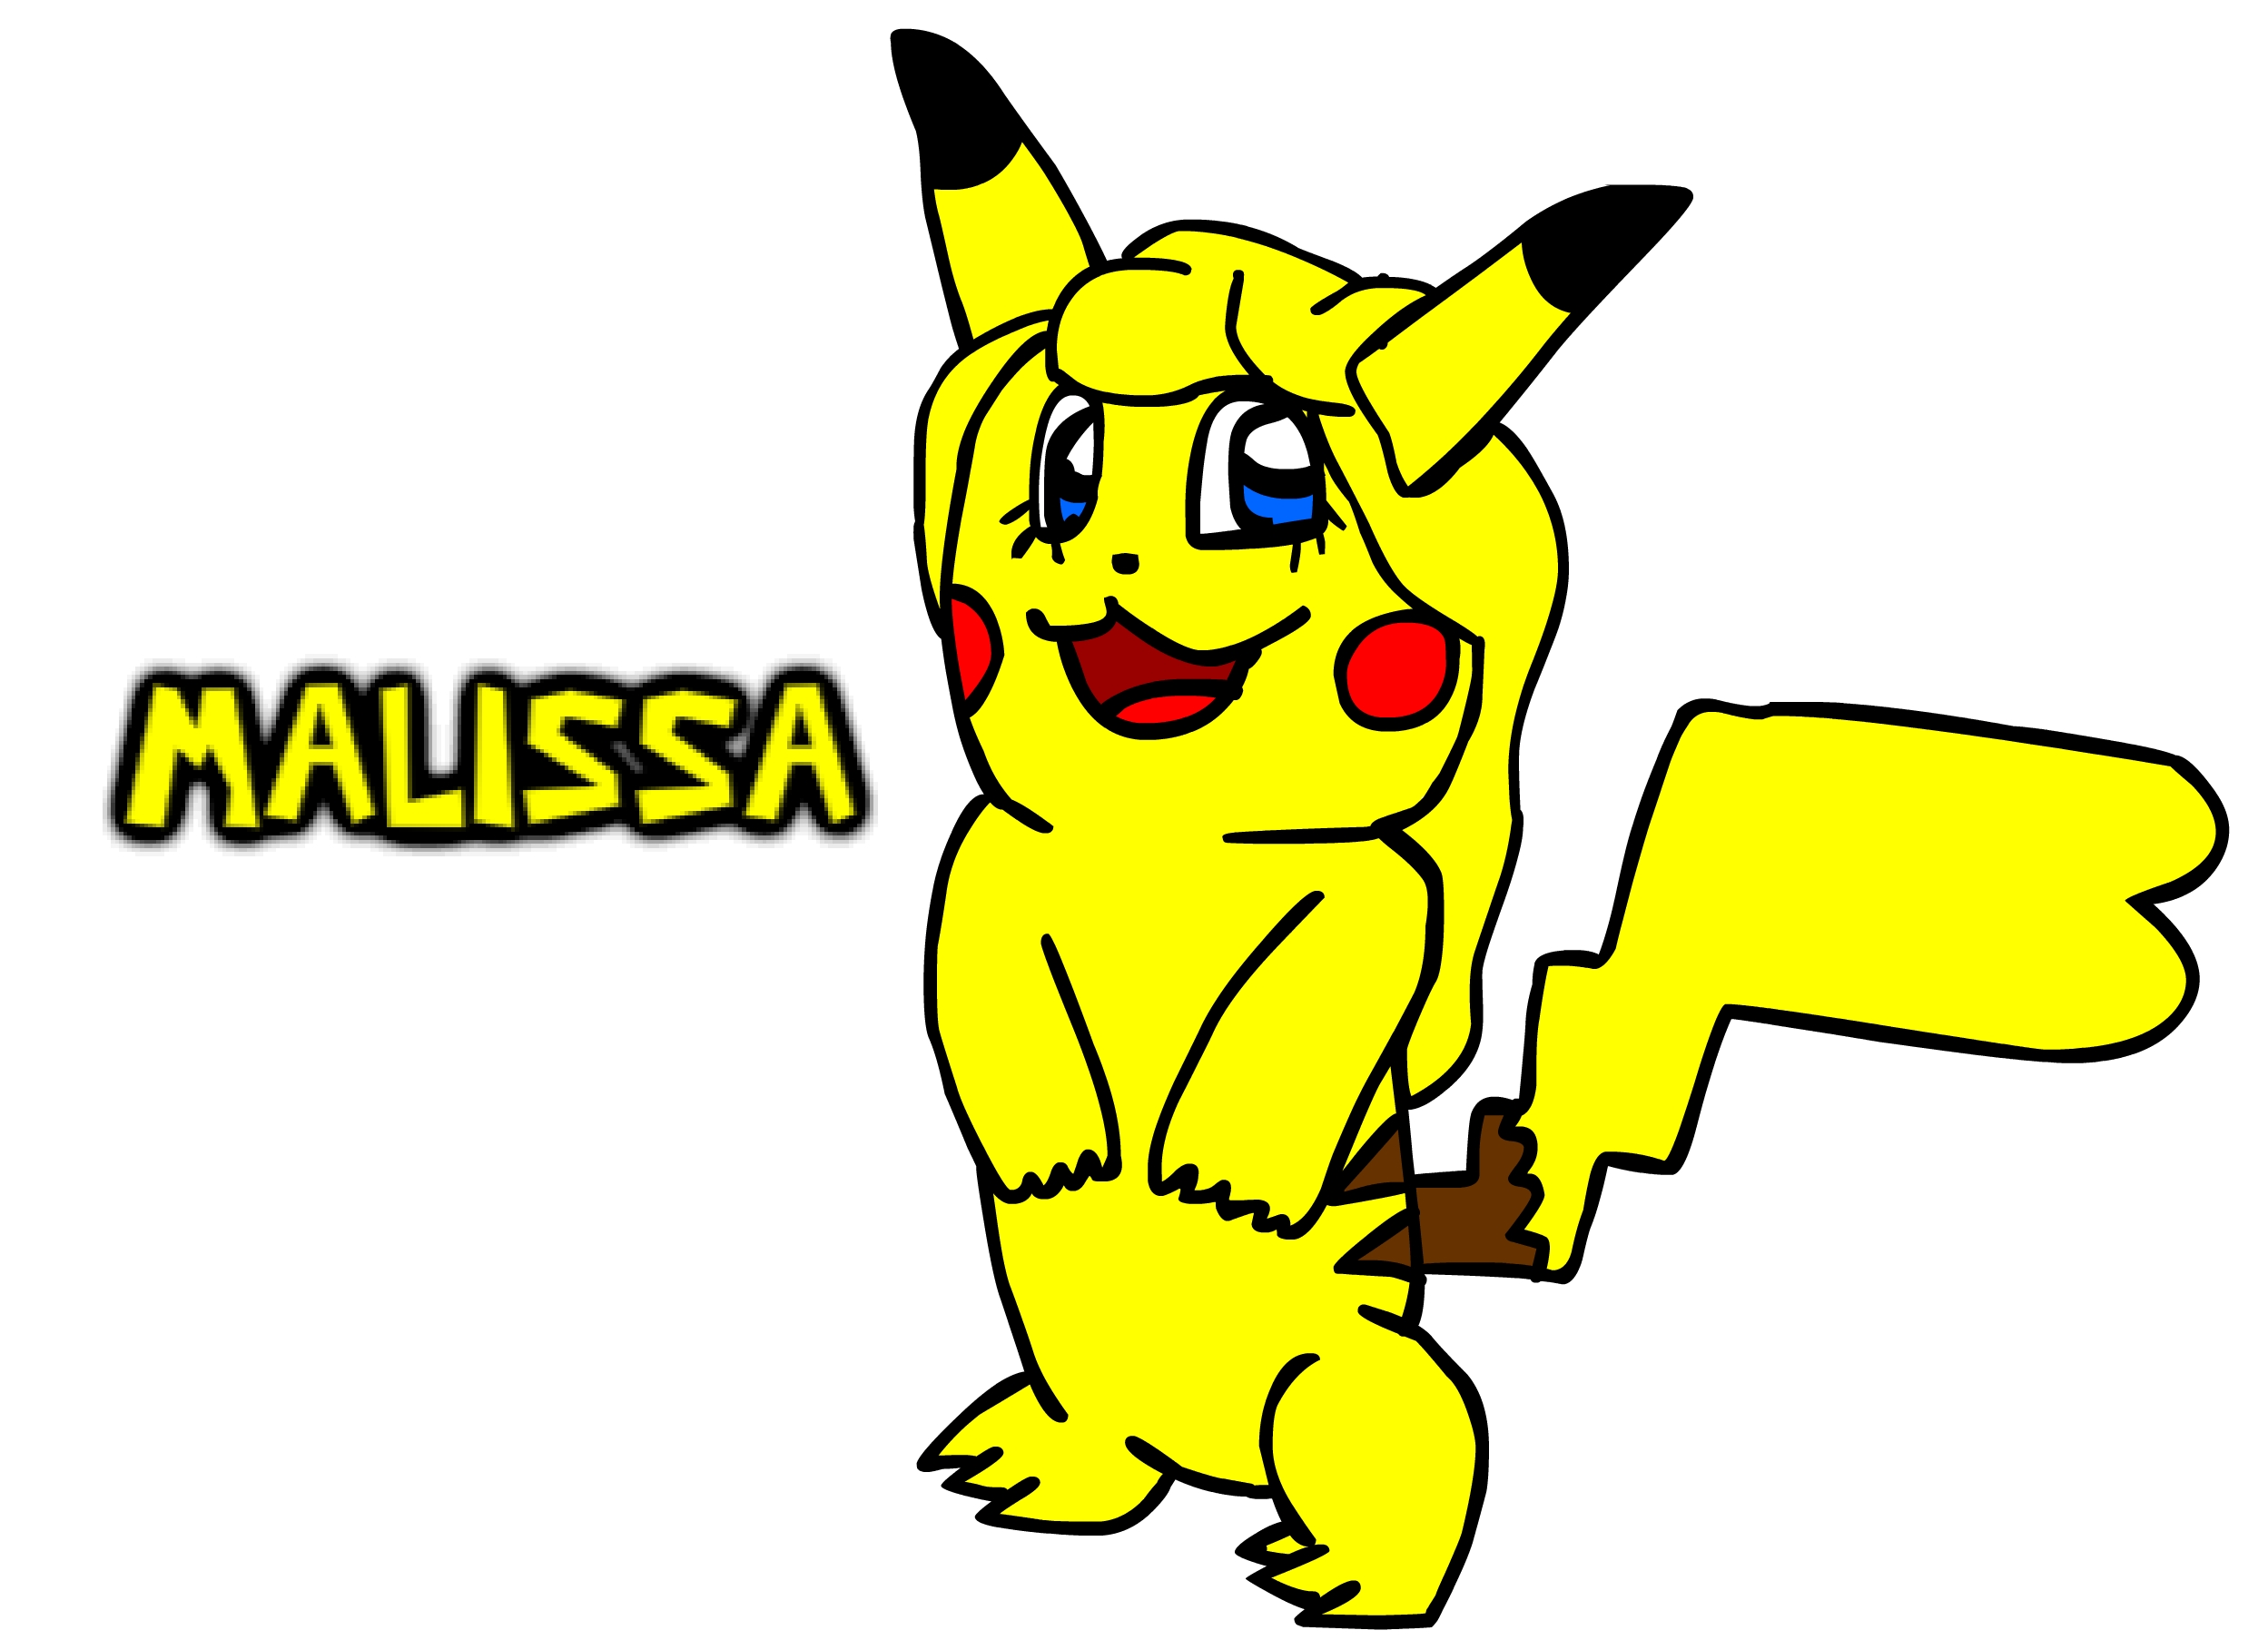 ART TRADES - Malissa the Pikachu